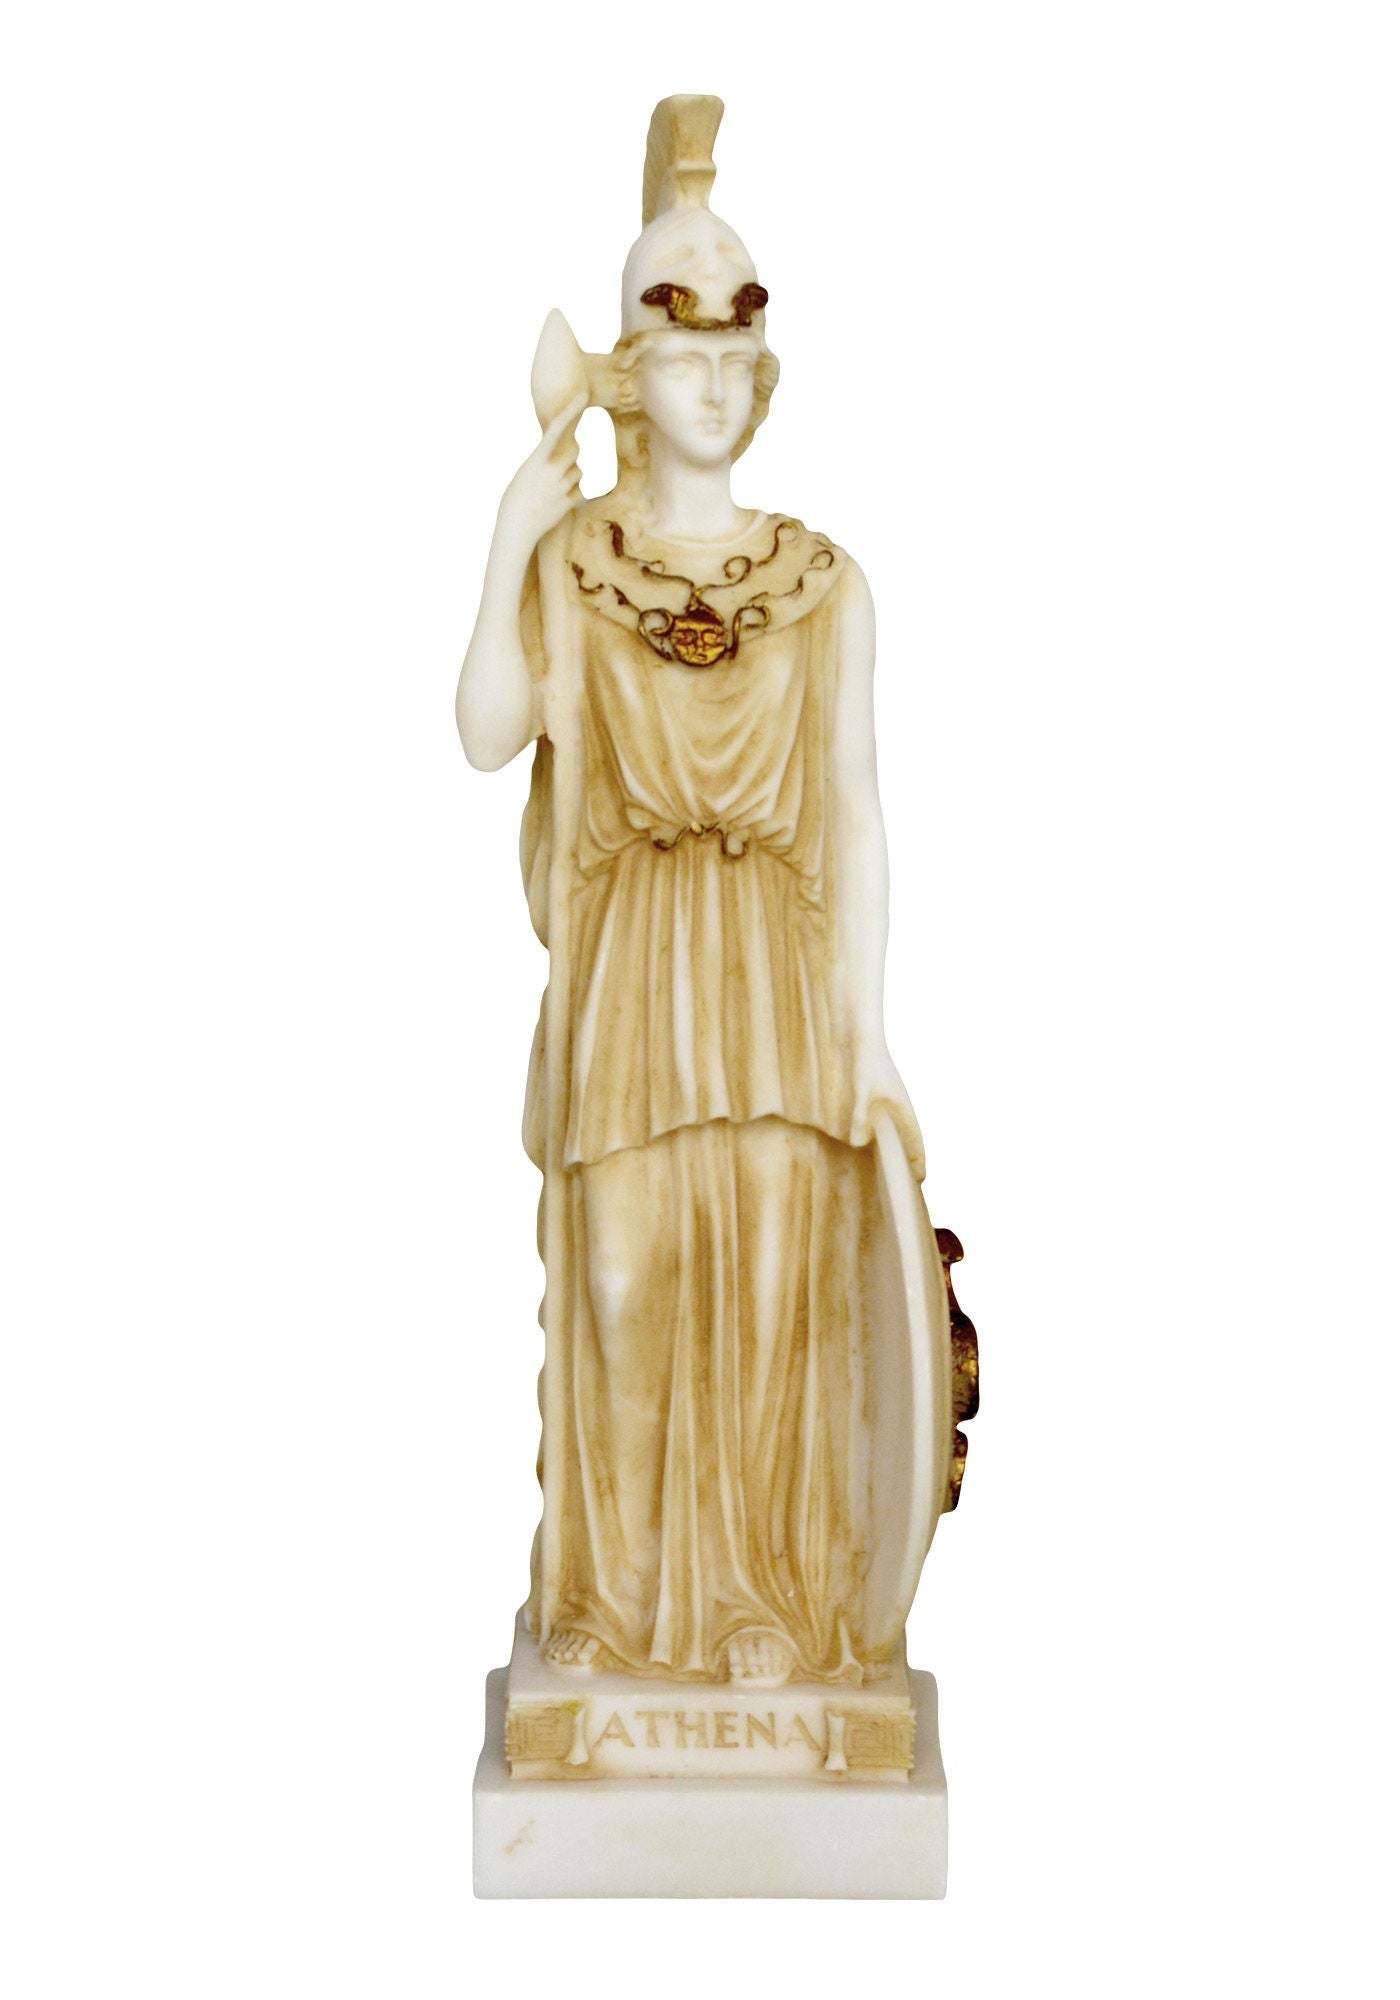 Athena Minerva - Greek Roman Goddes of Wisdom, Strength, Strategy, Courage, Inspiration, Arts, Crafts, and Skill - Aged Alabaster Sculpture